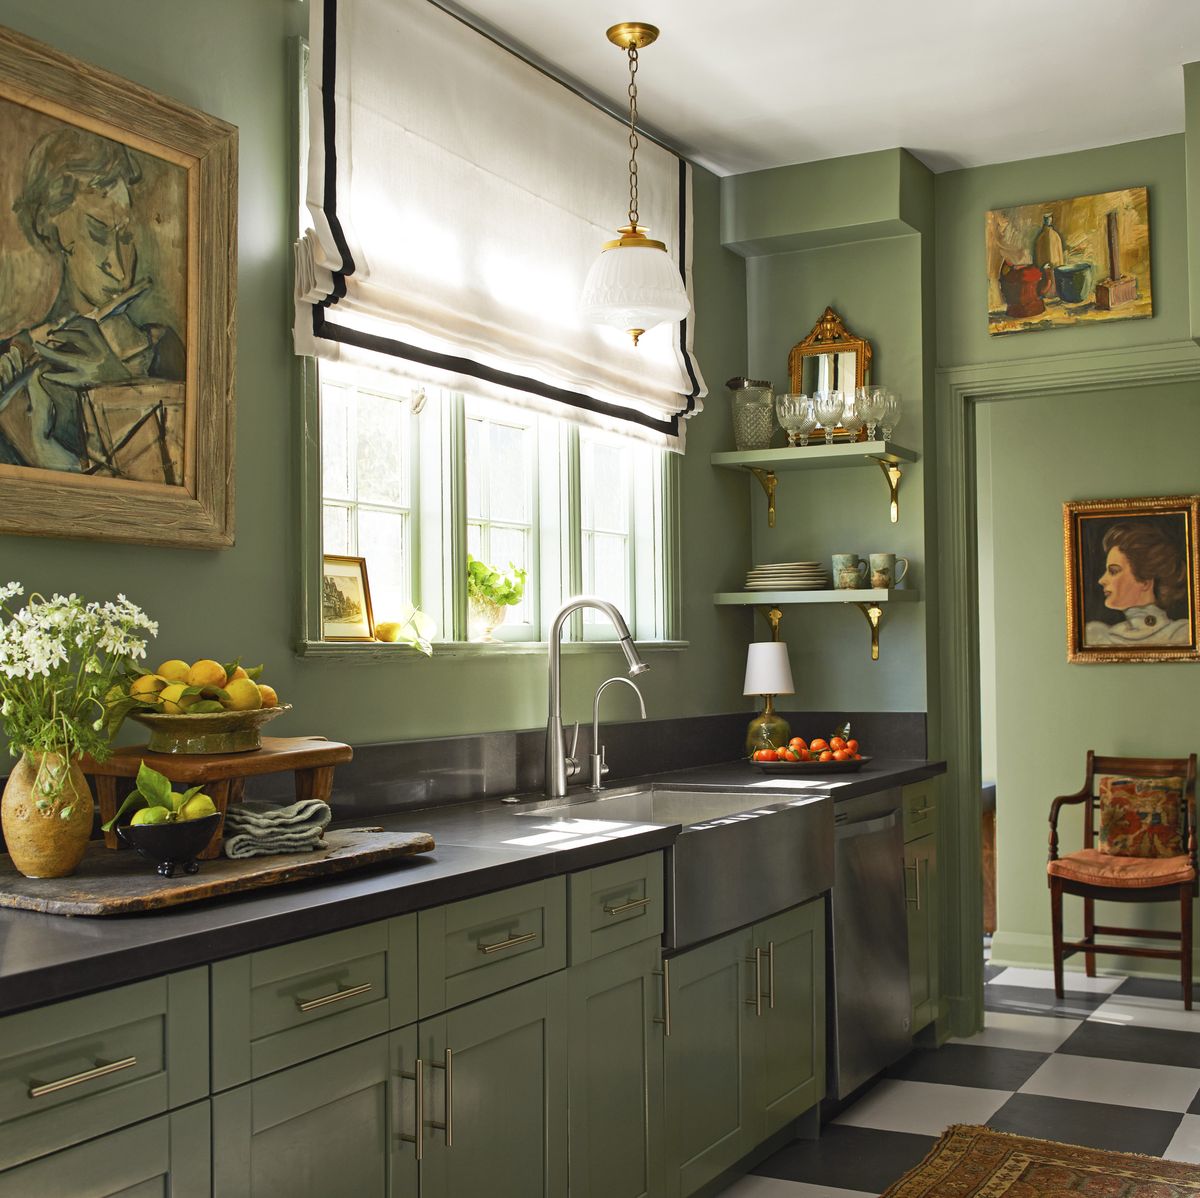 10 Best Kitchen Wall Decor Ideas